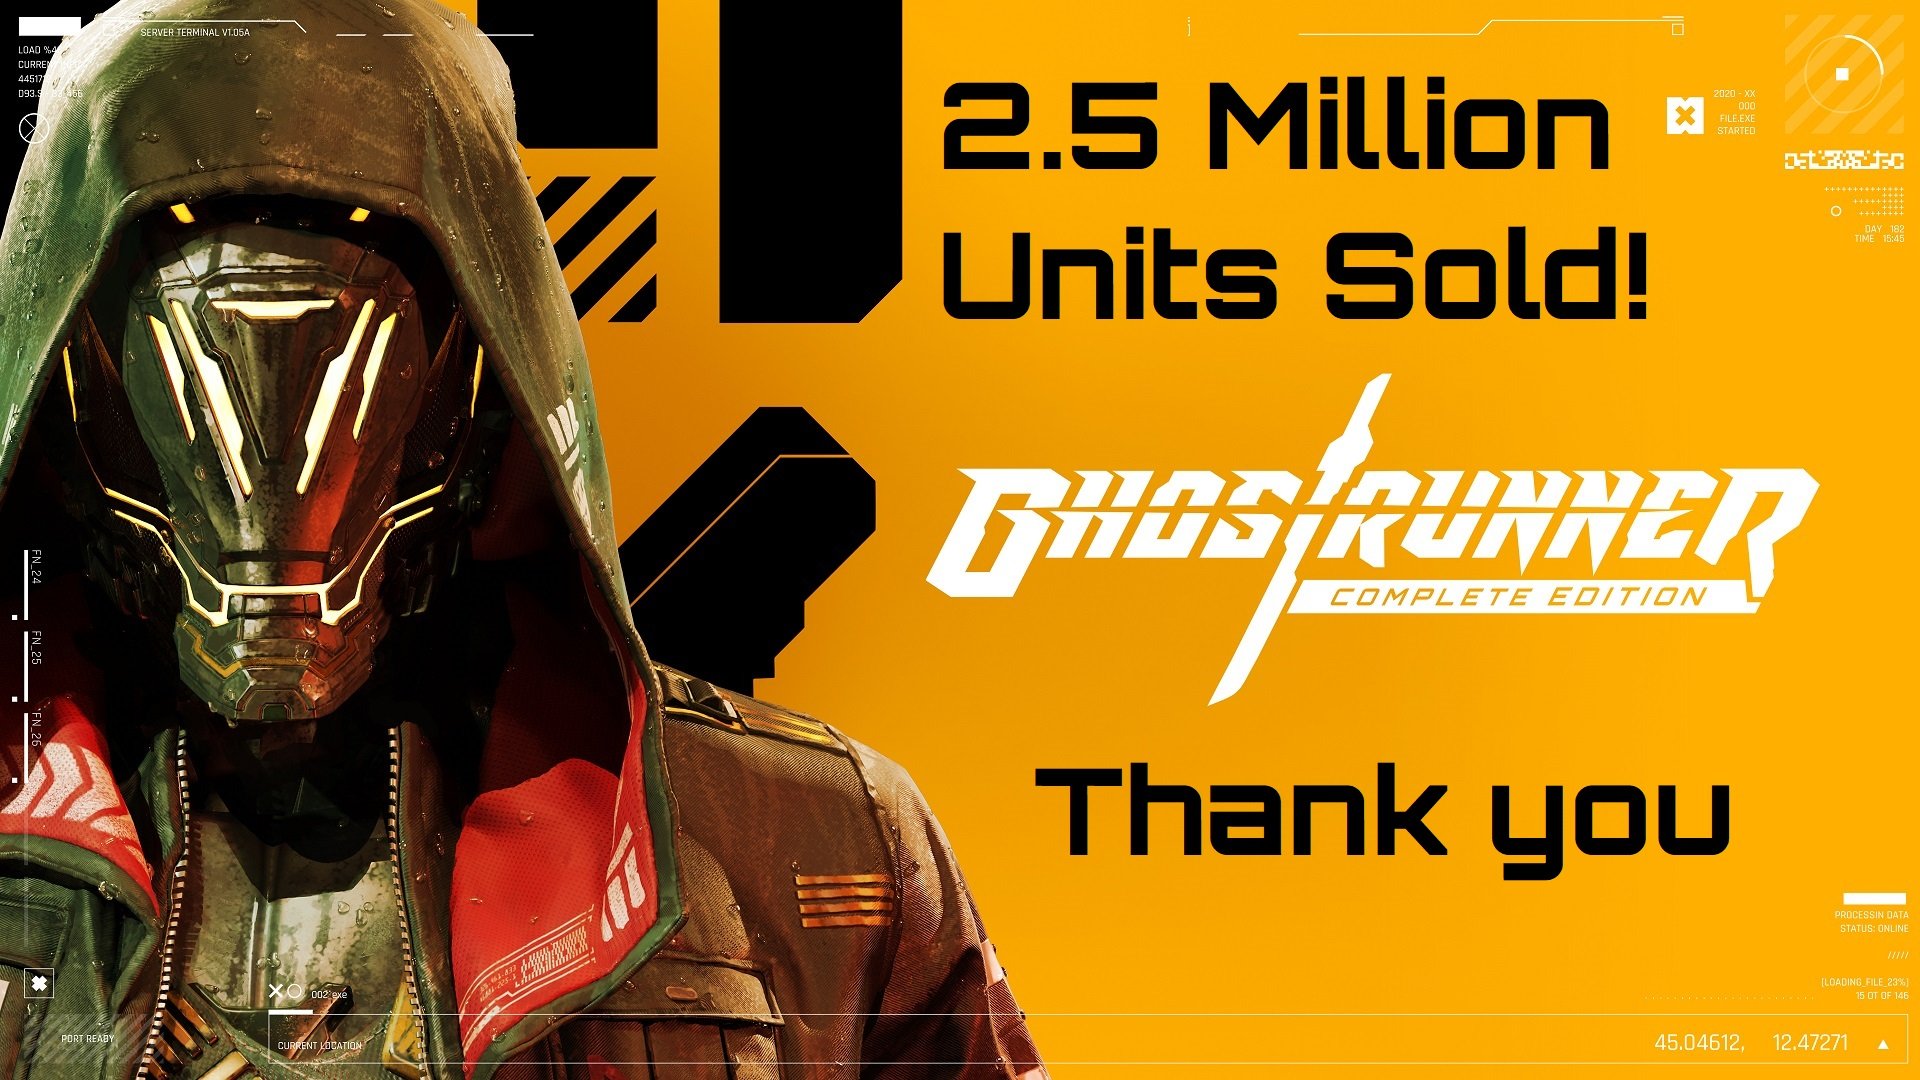 #
      Ghostrunner sales top 2.5 million